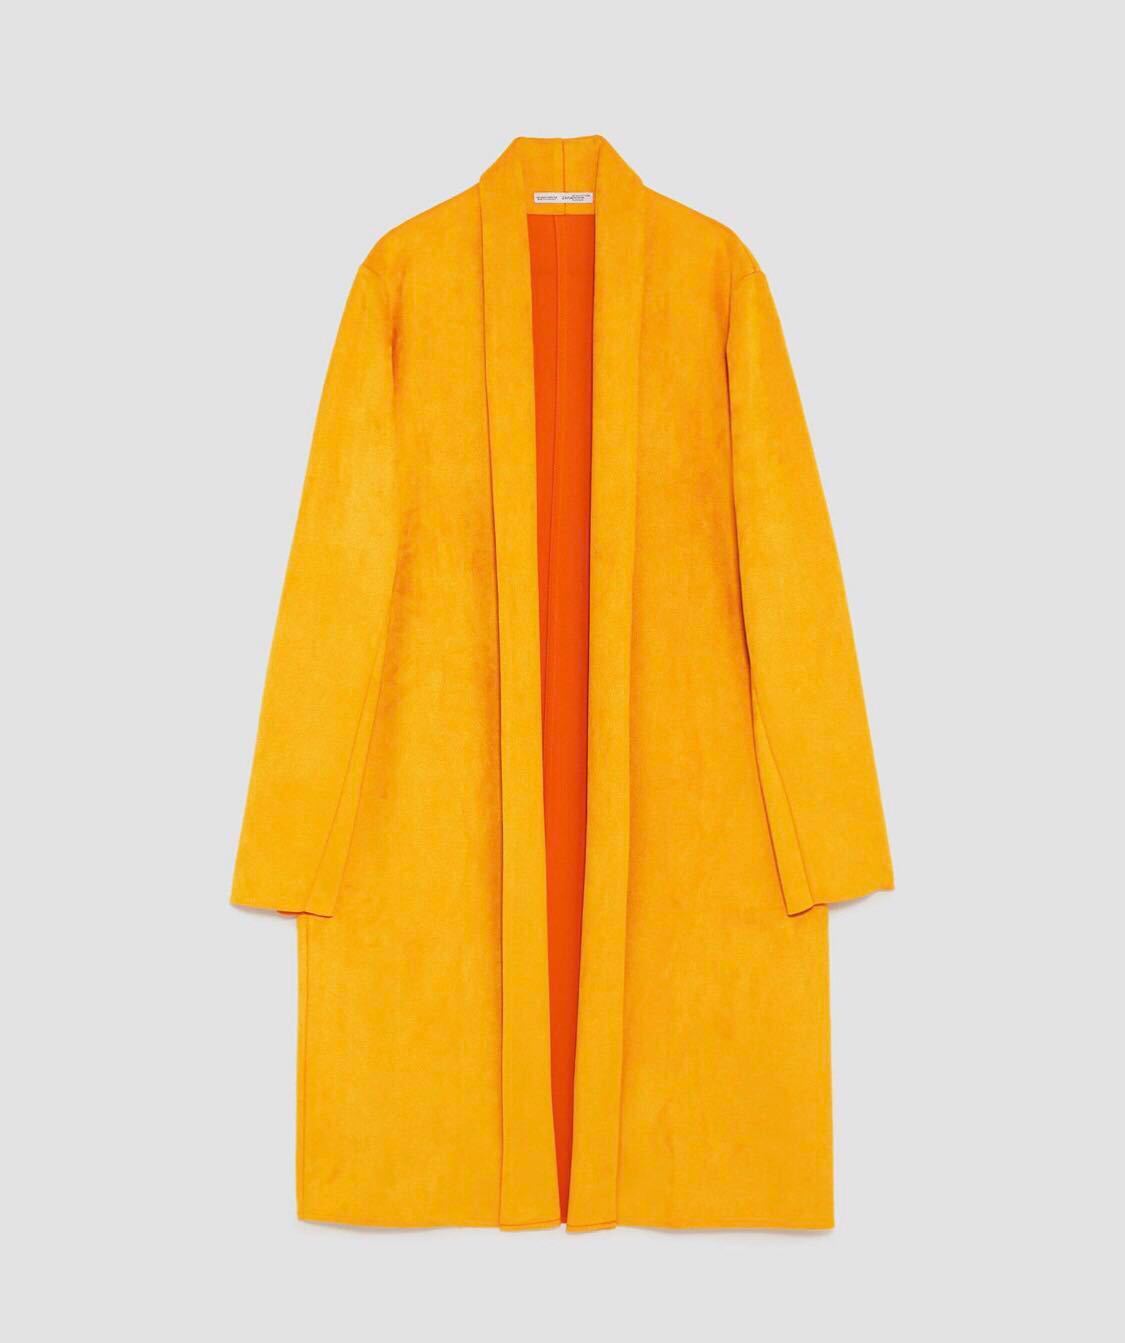 zara mustard coat